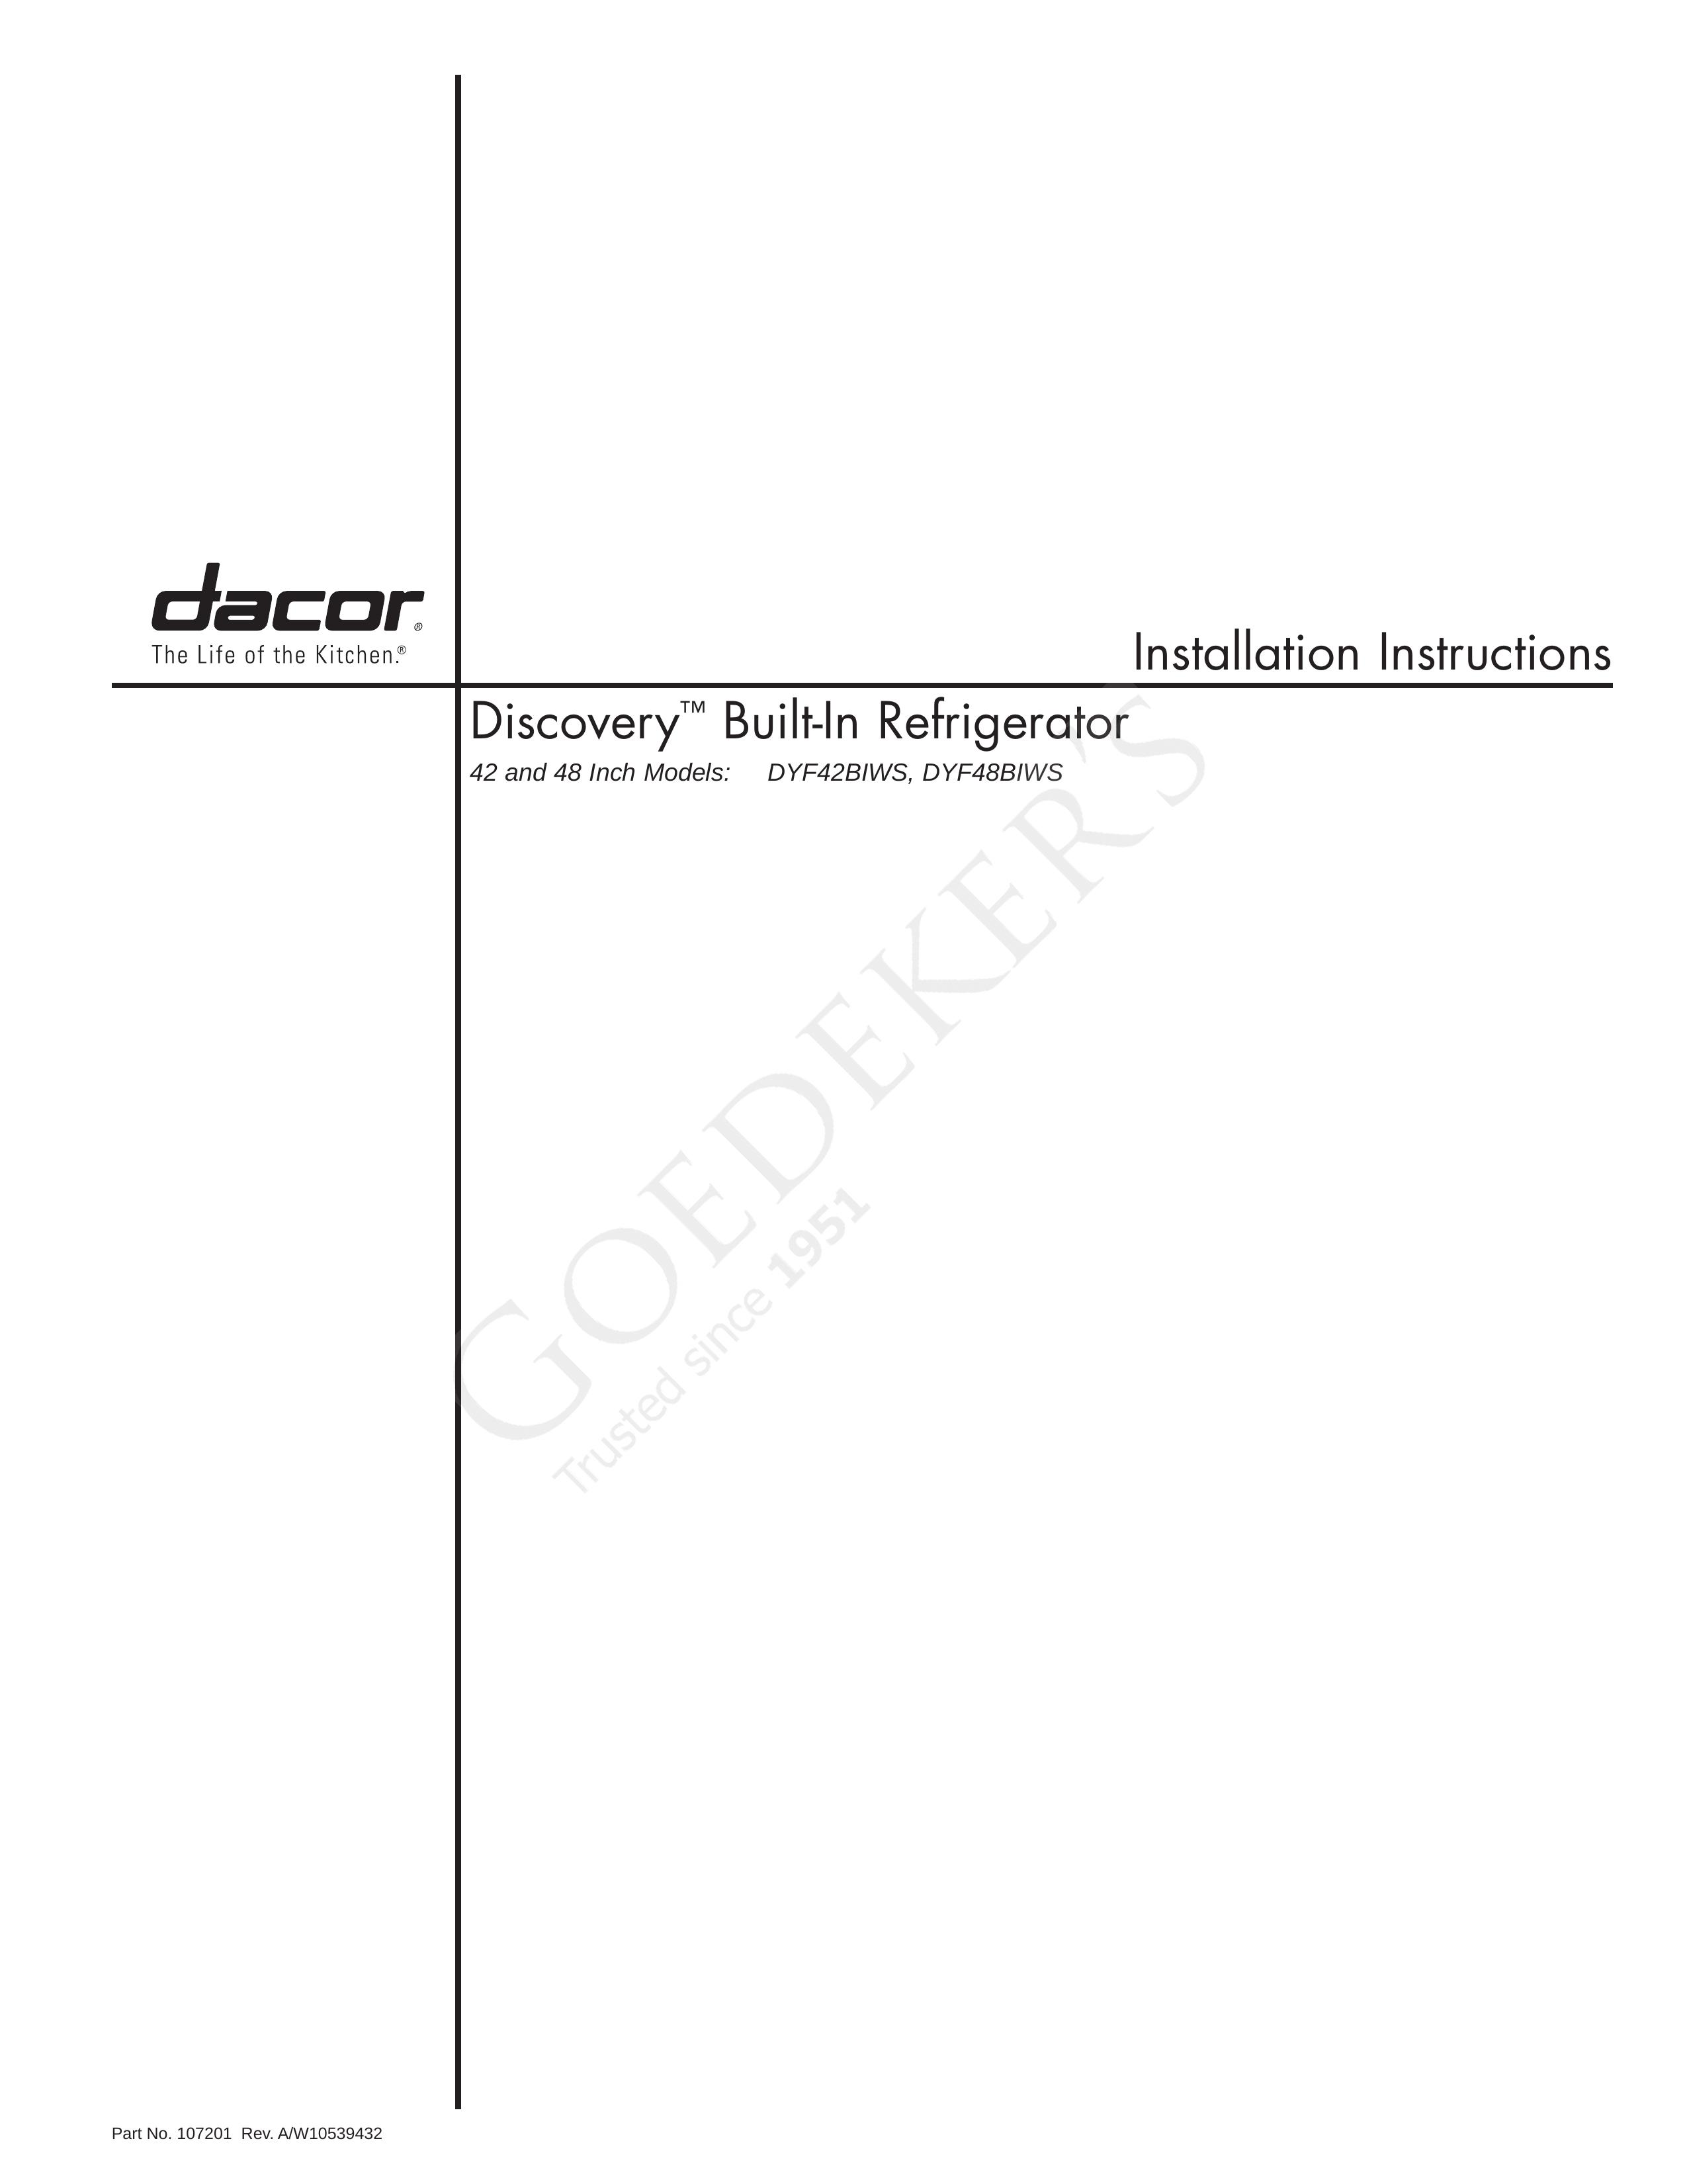 Dacor DYF428IWS Refrigerator User Manual